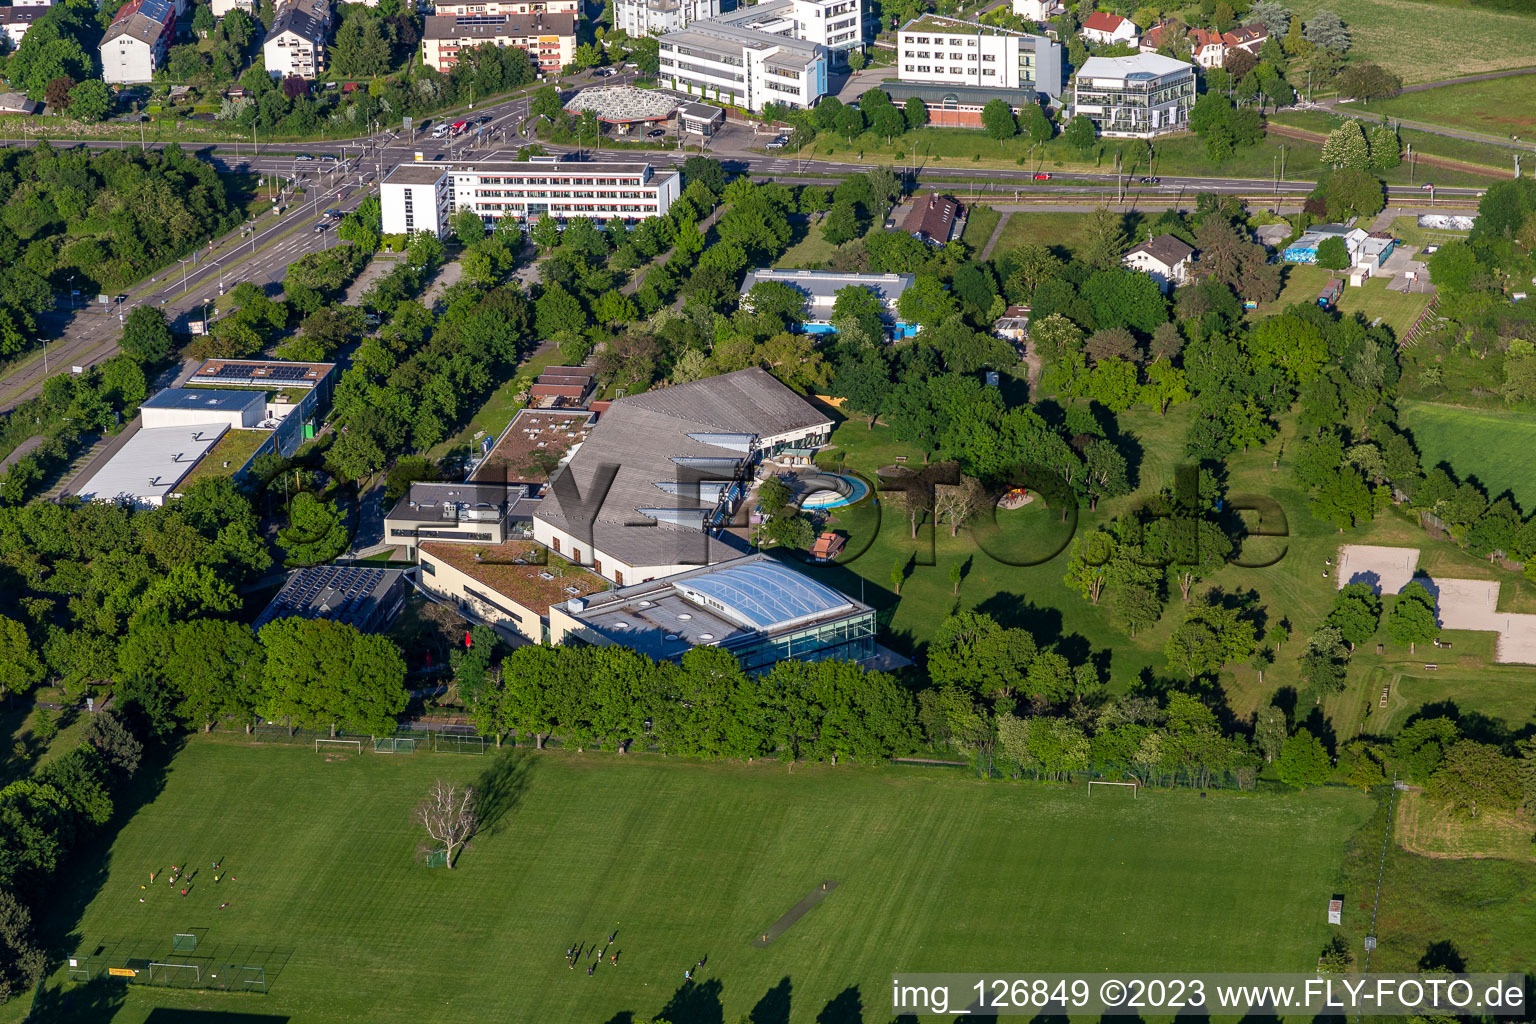 Aerial view of Karlsuhe fan pool in the district Hagsfeld in Karlsruhe in the state Baden-Wuerttemberg, Germany